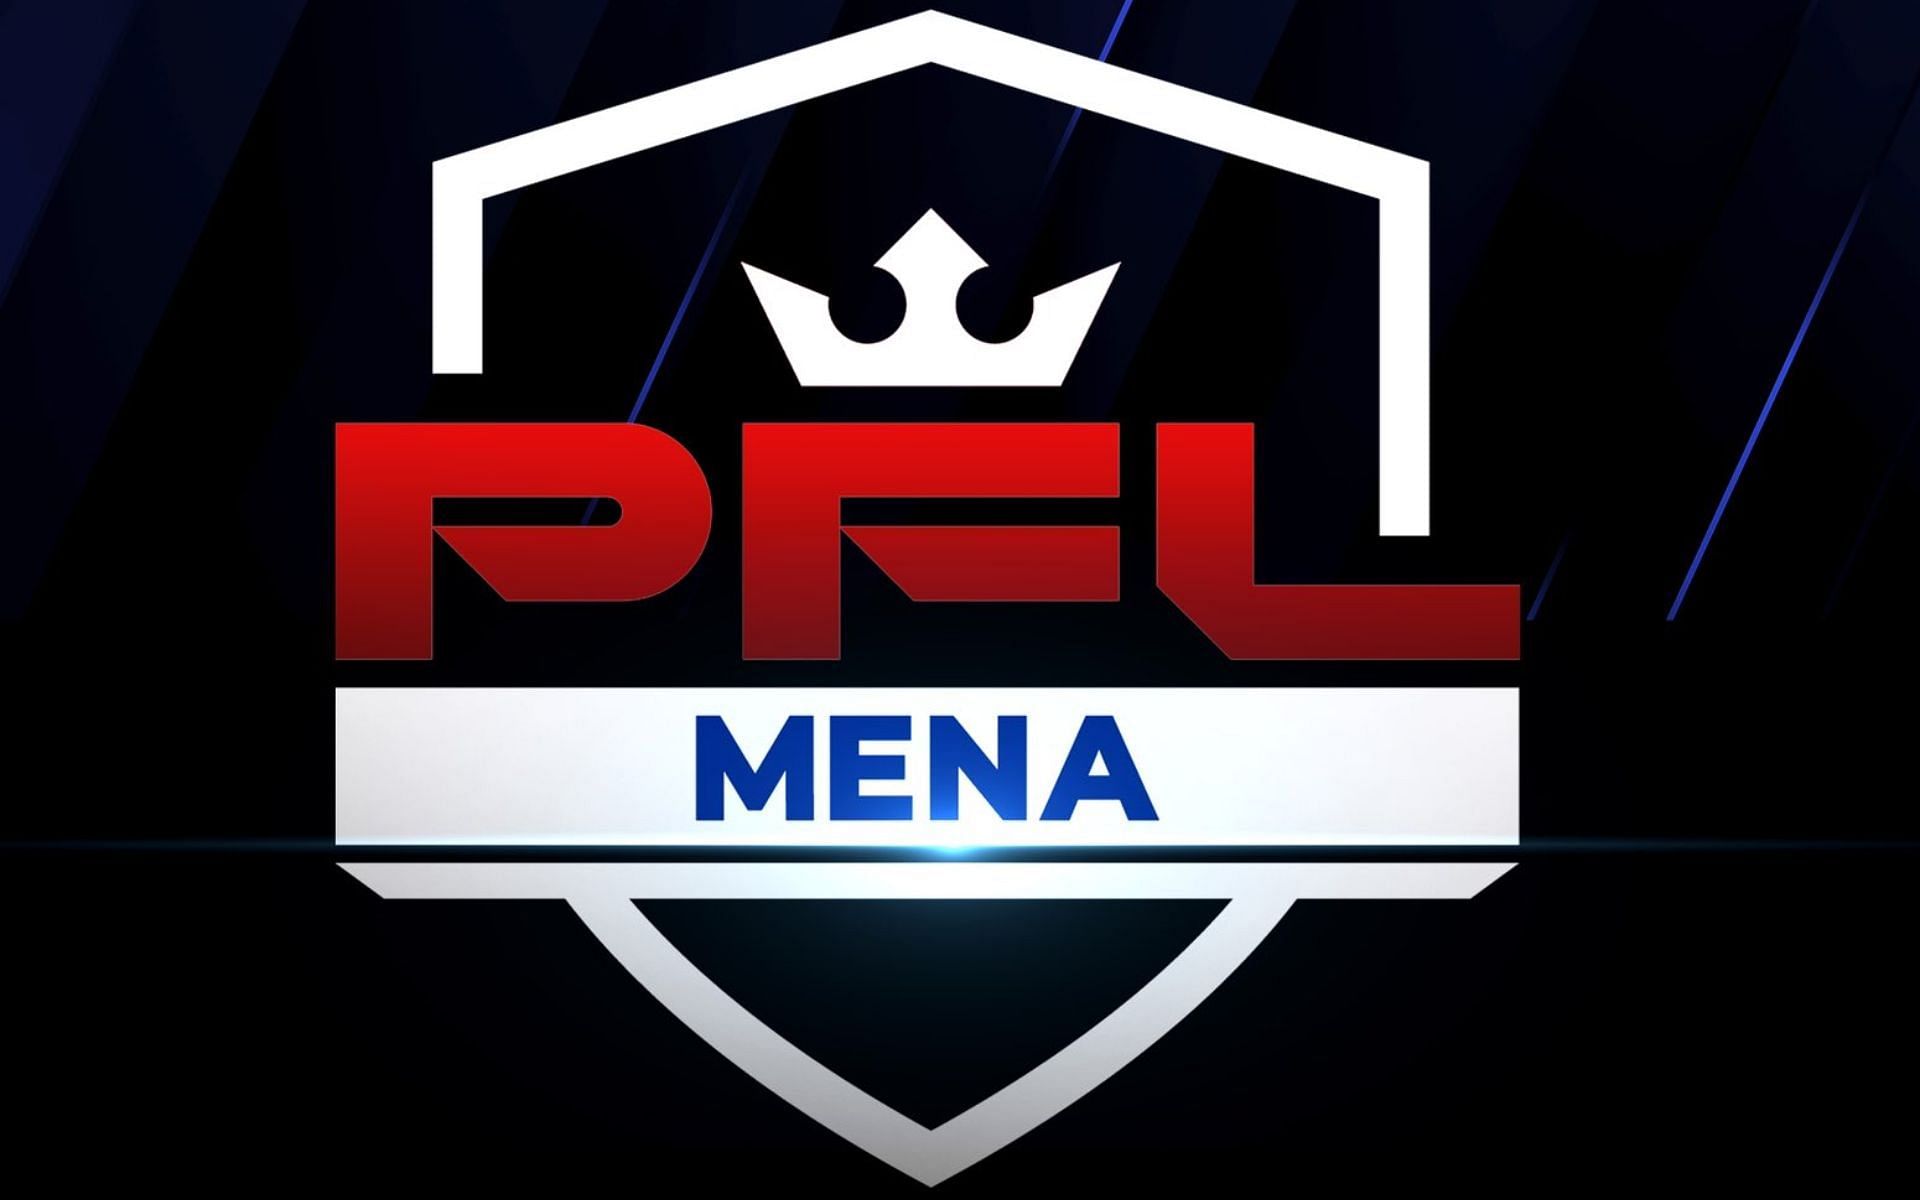 PFL MENA logo [Photo credit: @PFLMMA - Twitter]